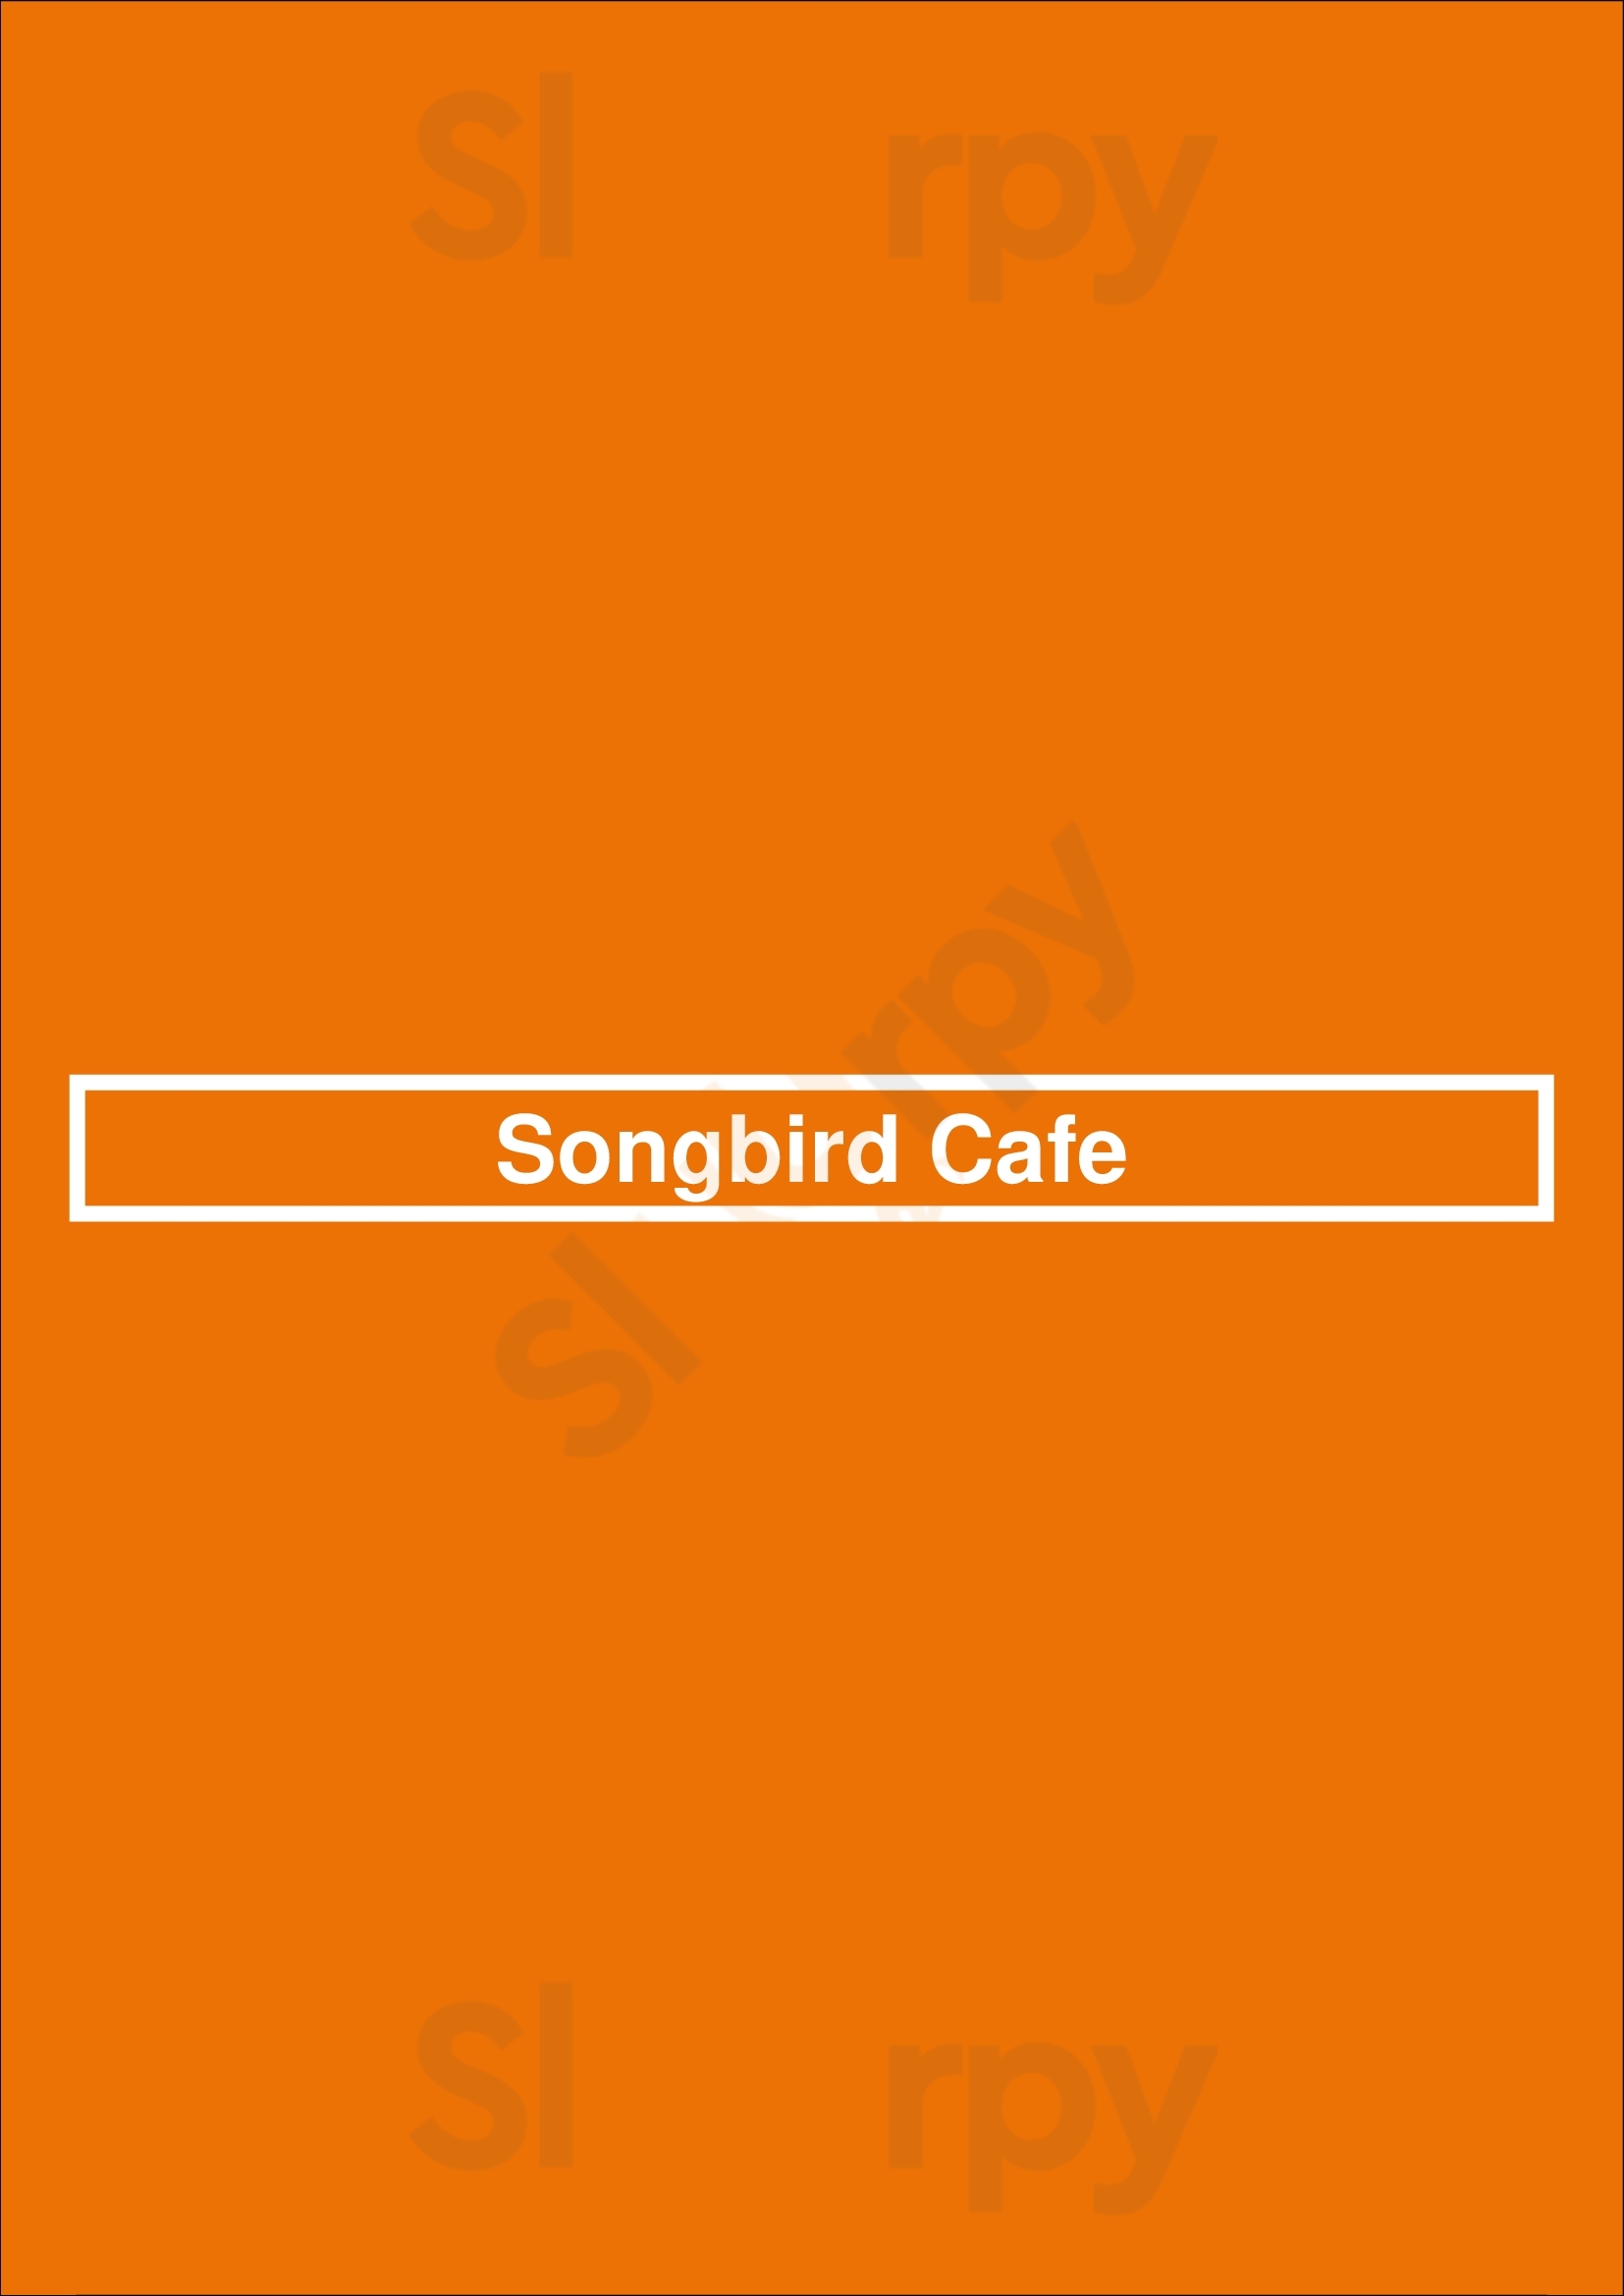 Songbird Cafe Kansas City Menu - 1